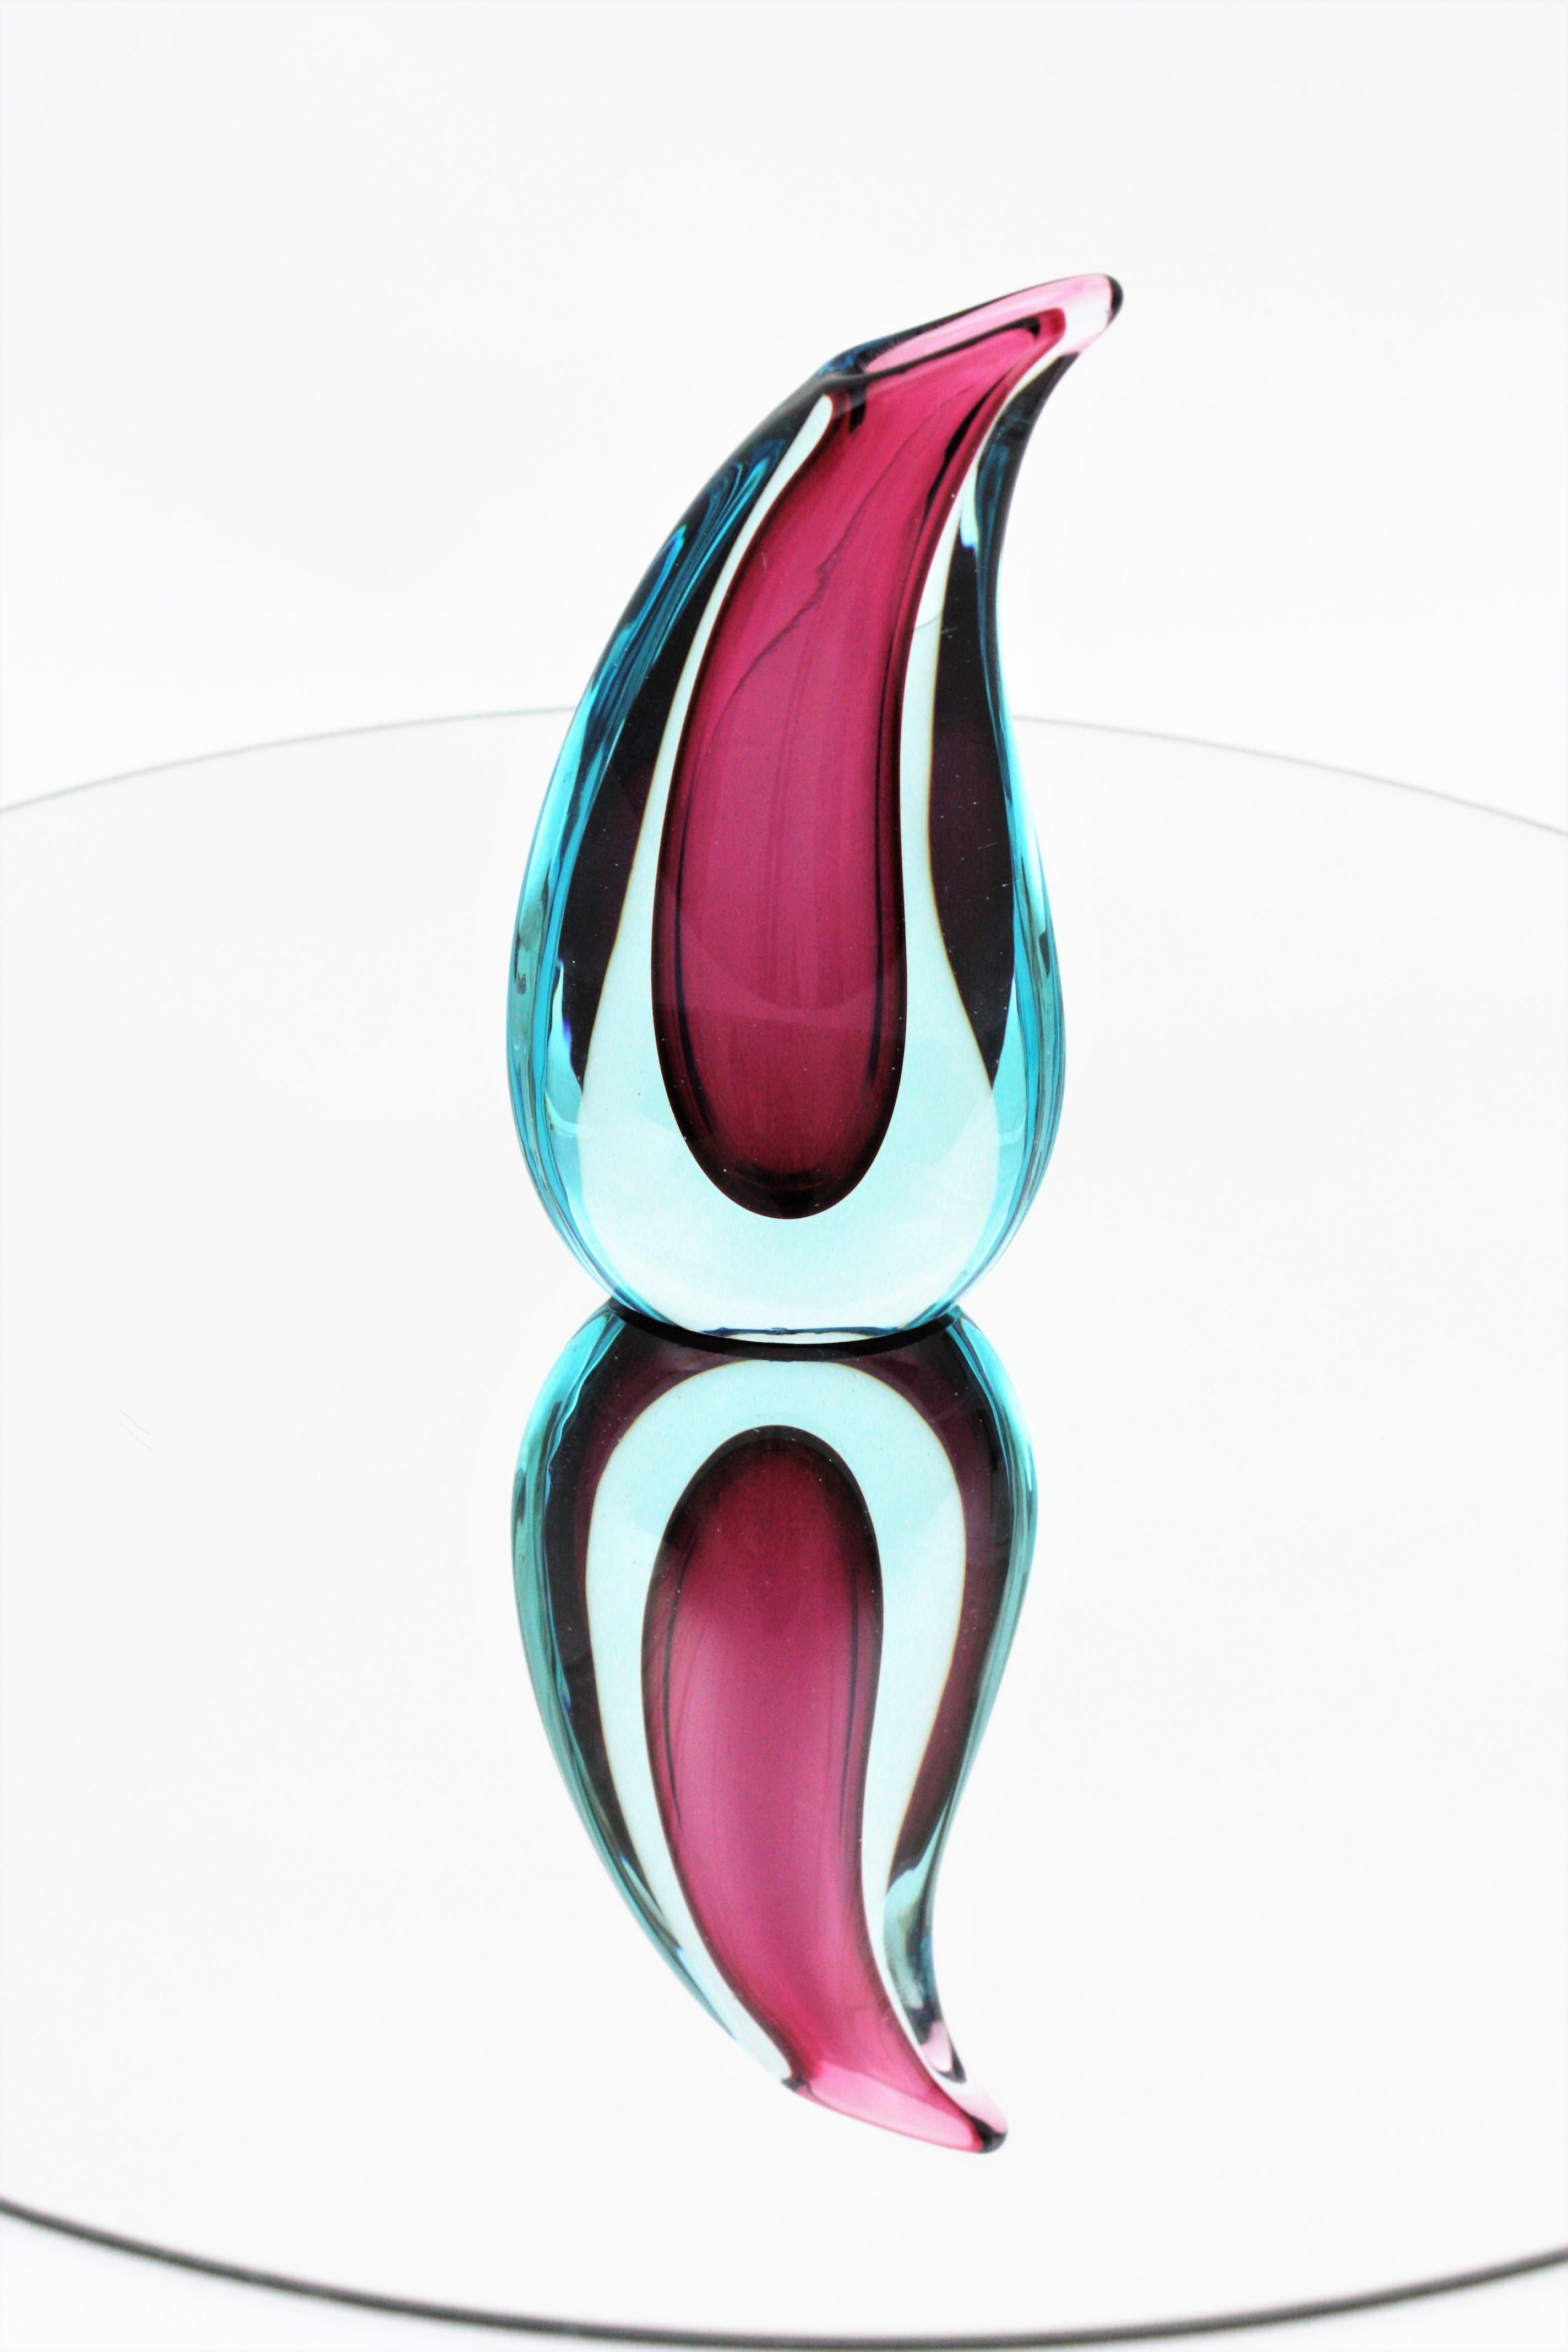 Art Glass Flavio Poli Seguso Murano Blue and Purple Sommerso Glass Teardrop Vase